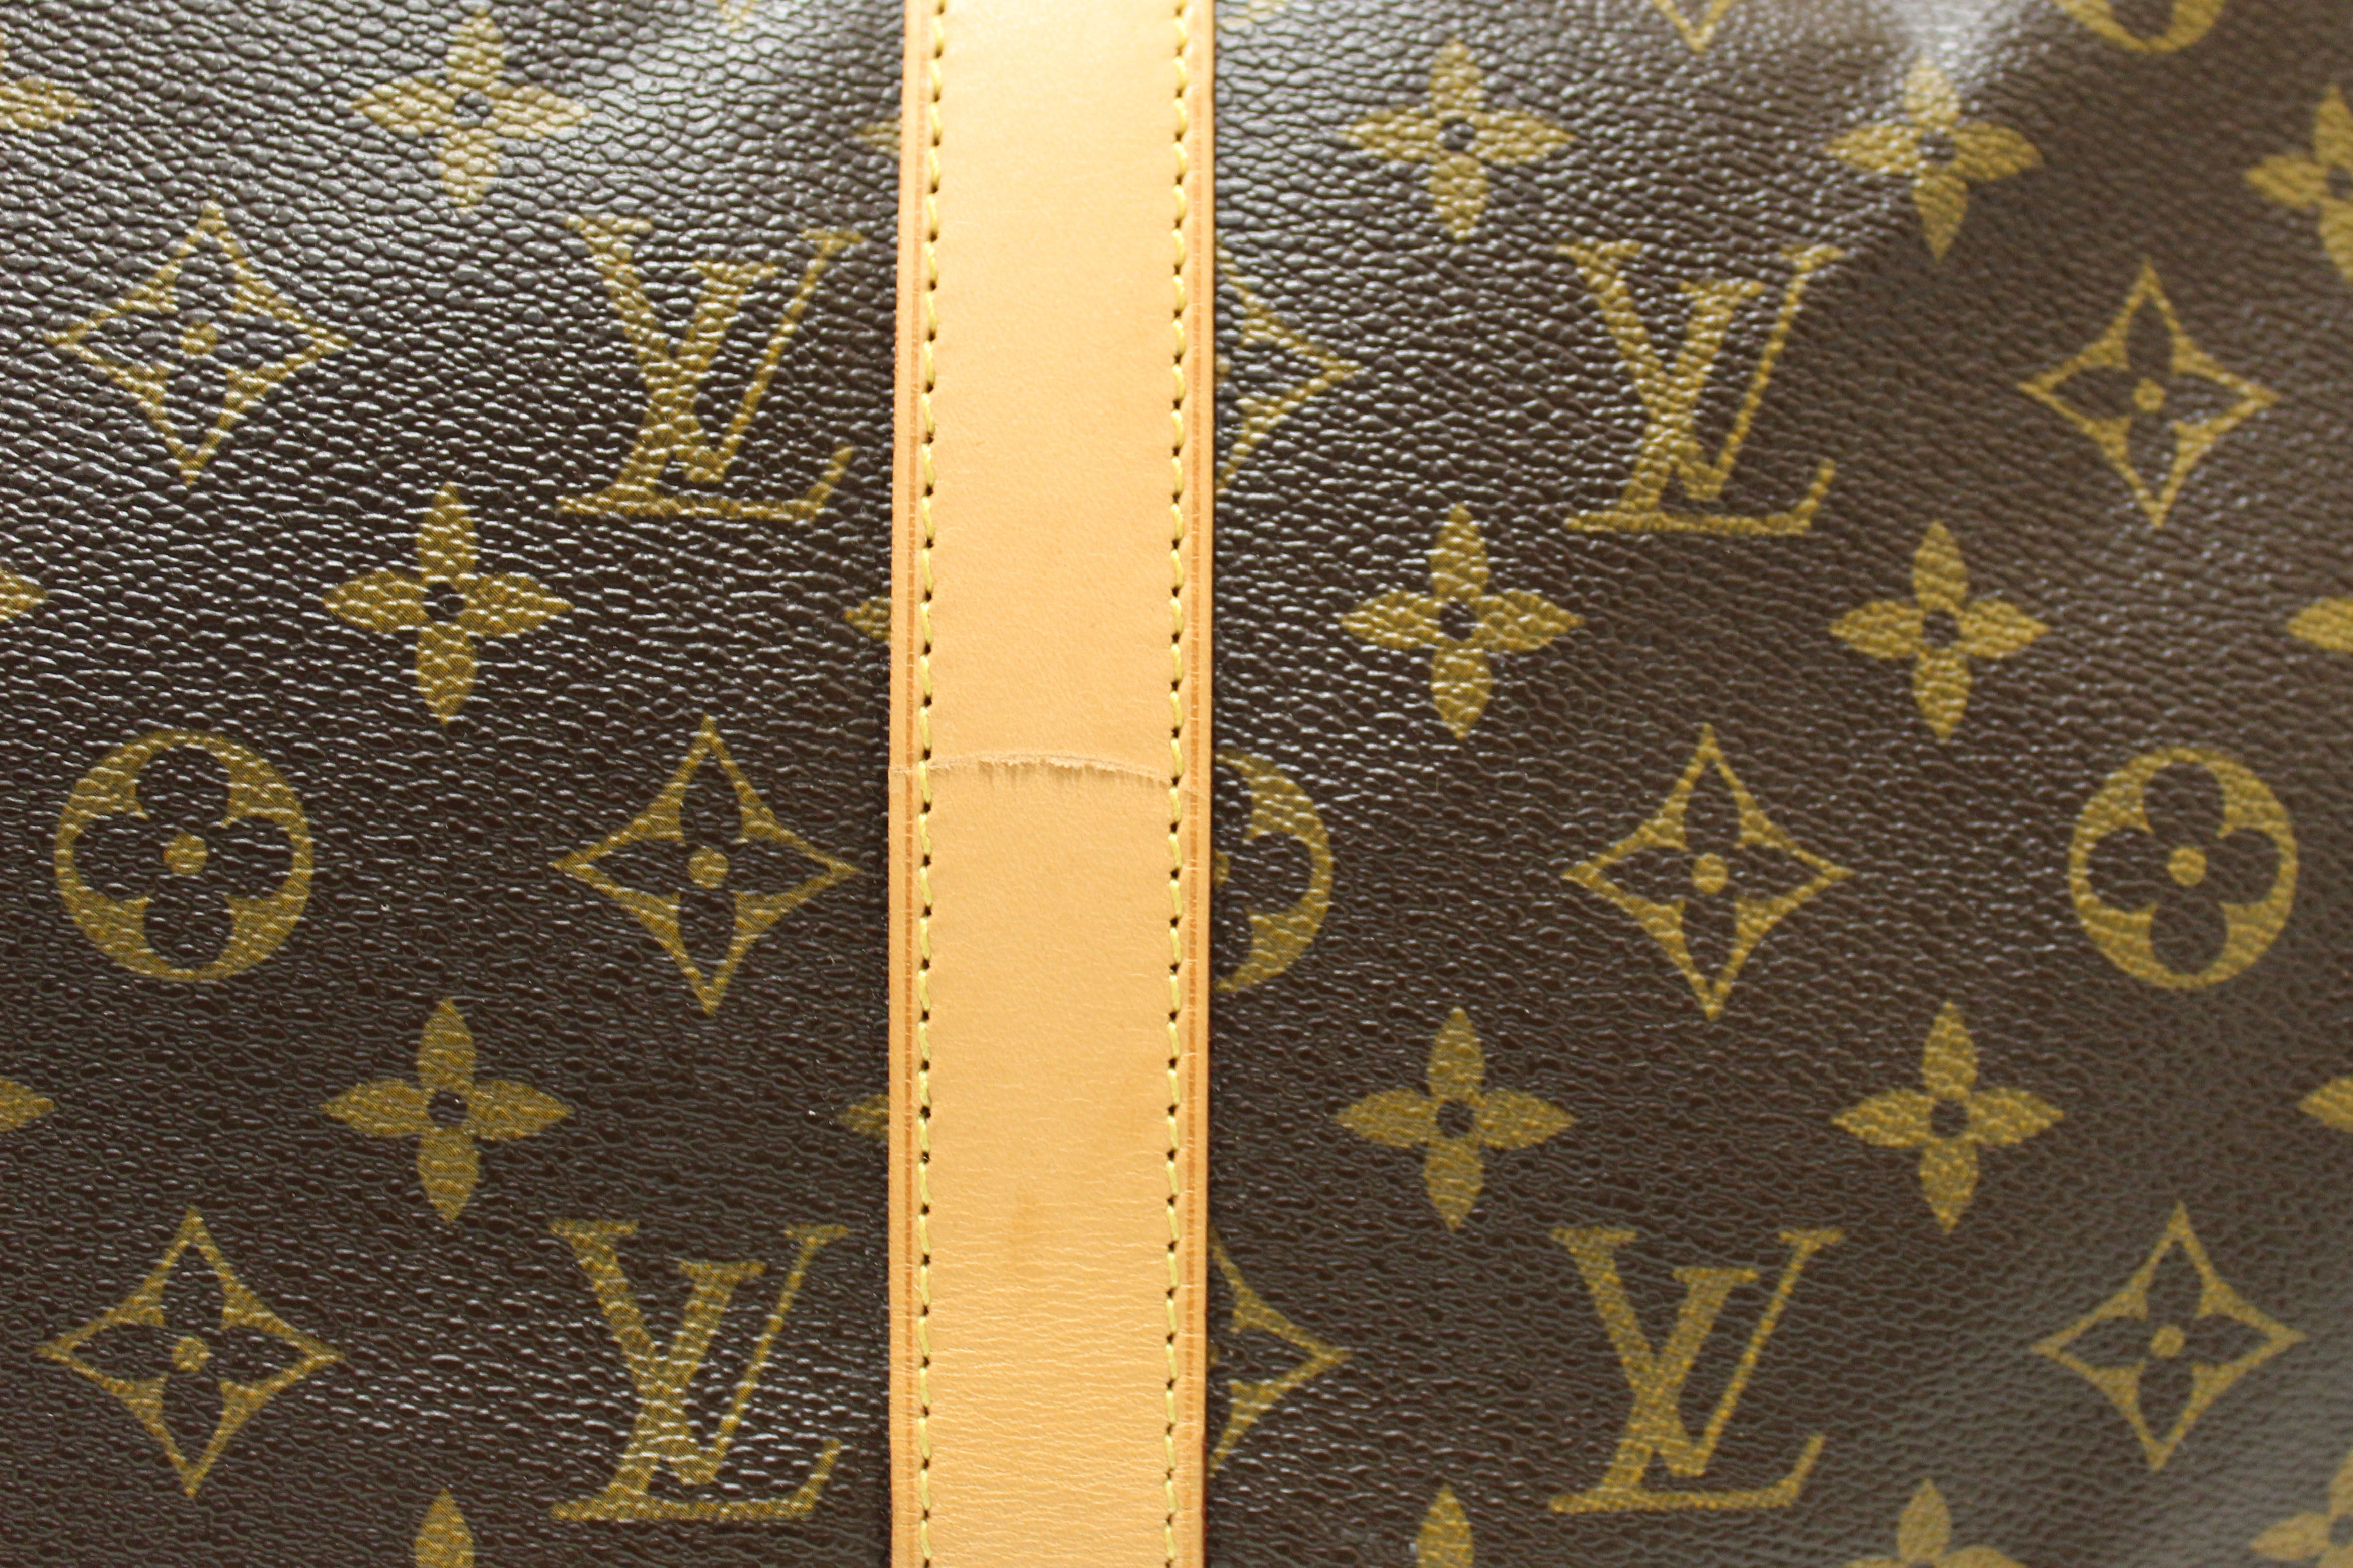 Authentic Louis Vuitton Classic Monogram Keepall 50 Travel Bag